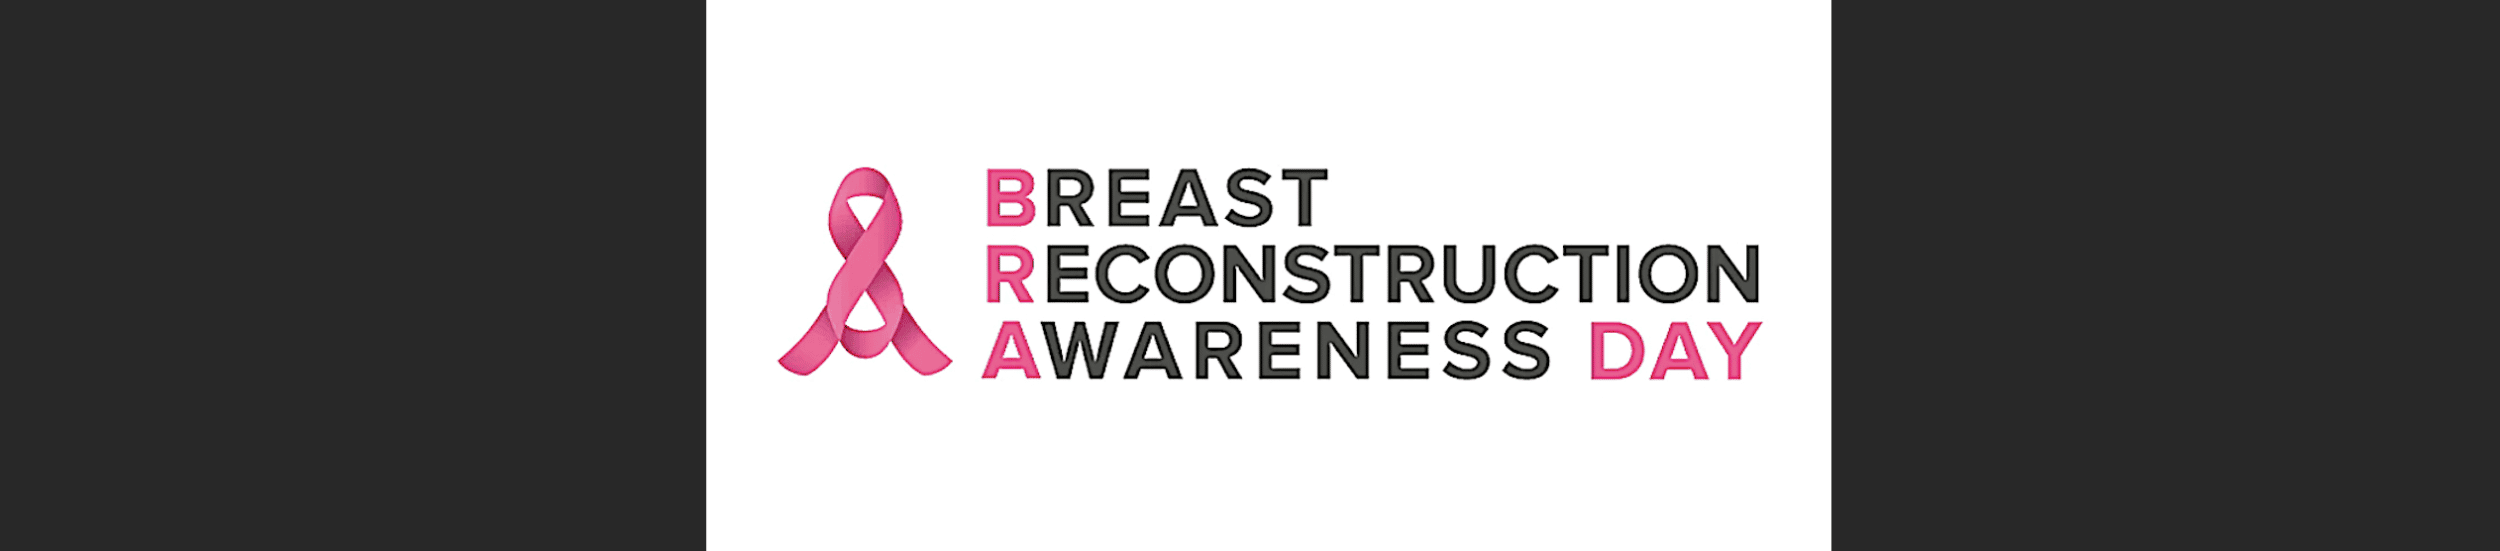 Breast Reconstruction Awareness Day - Dr. Momtazi